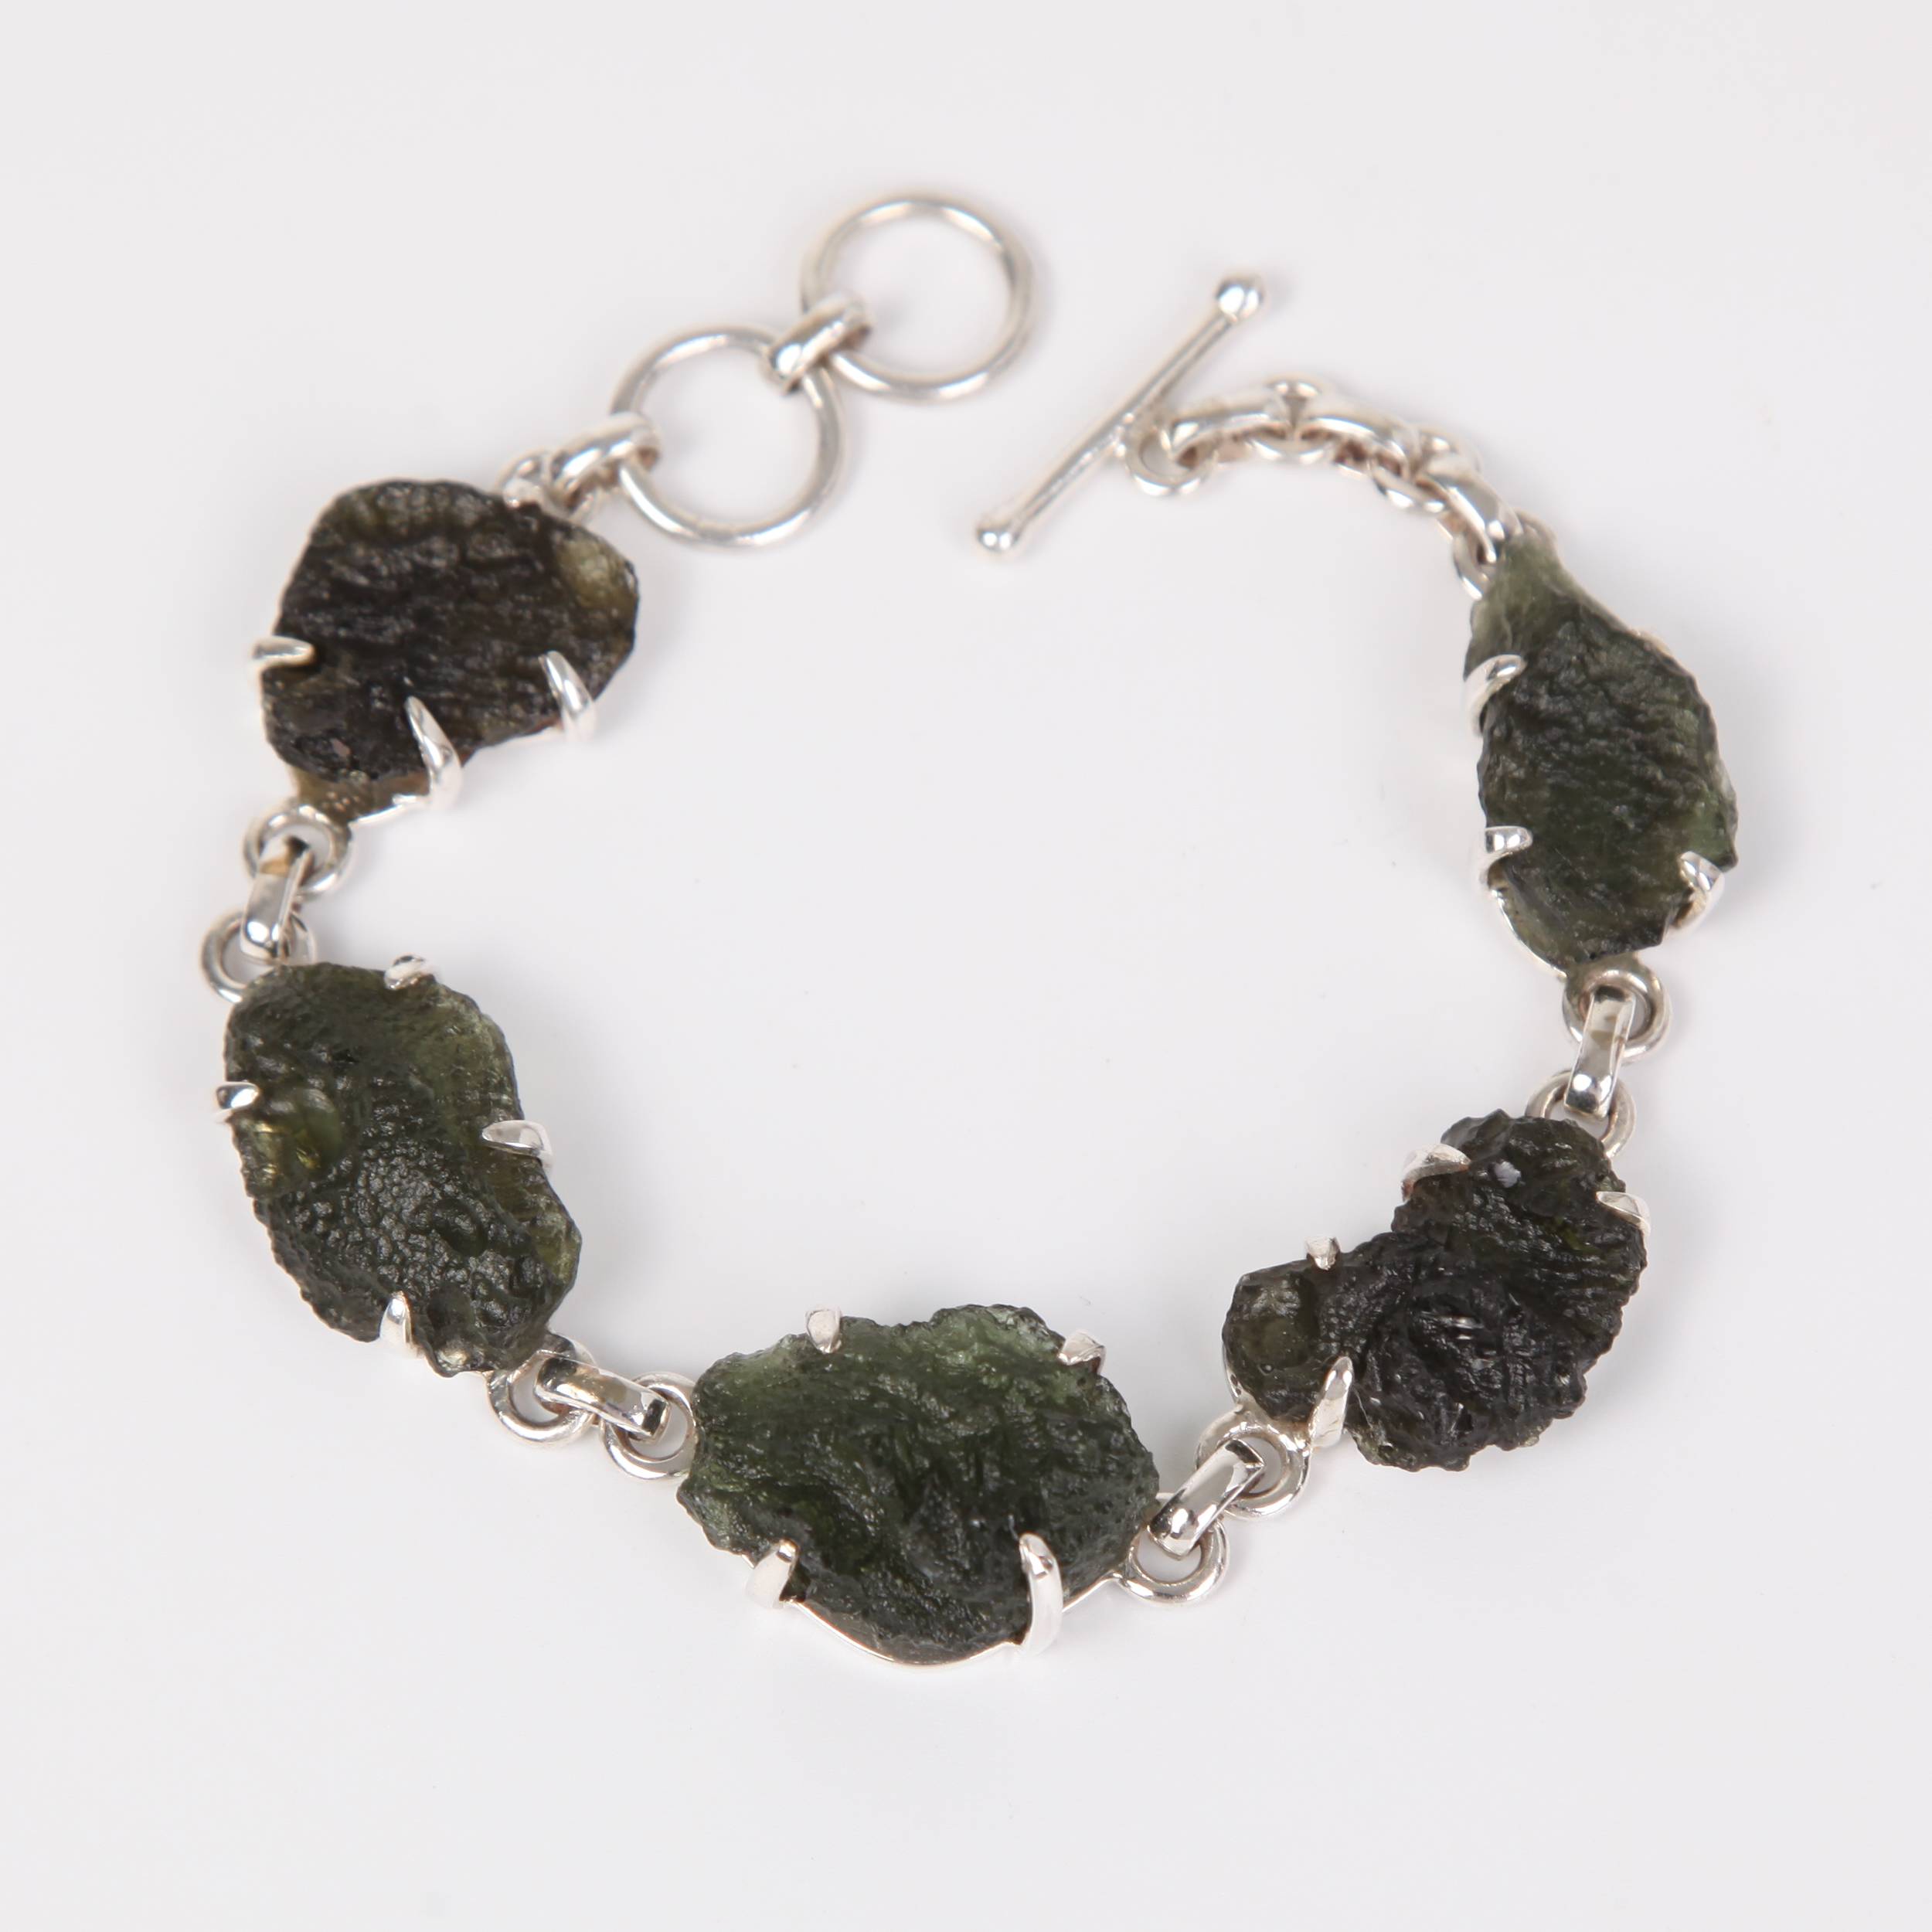 Rough Moldavite (meteorite) Sterling Silver Bracelet